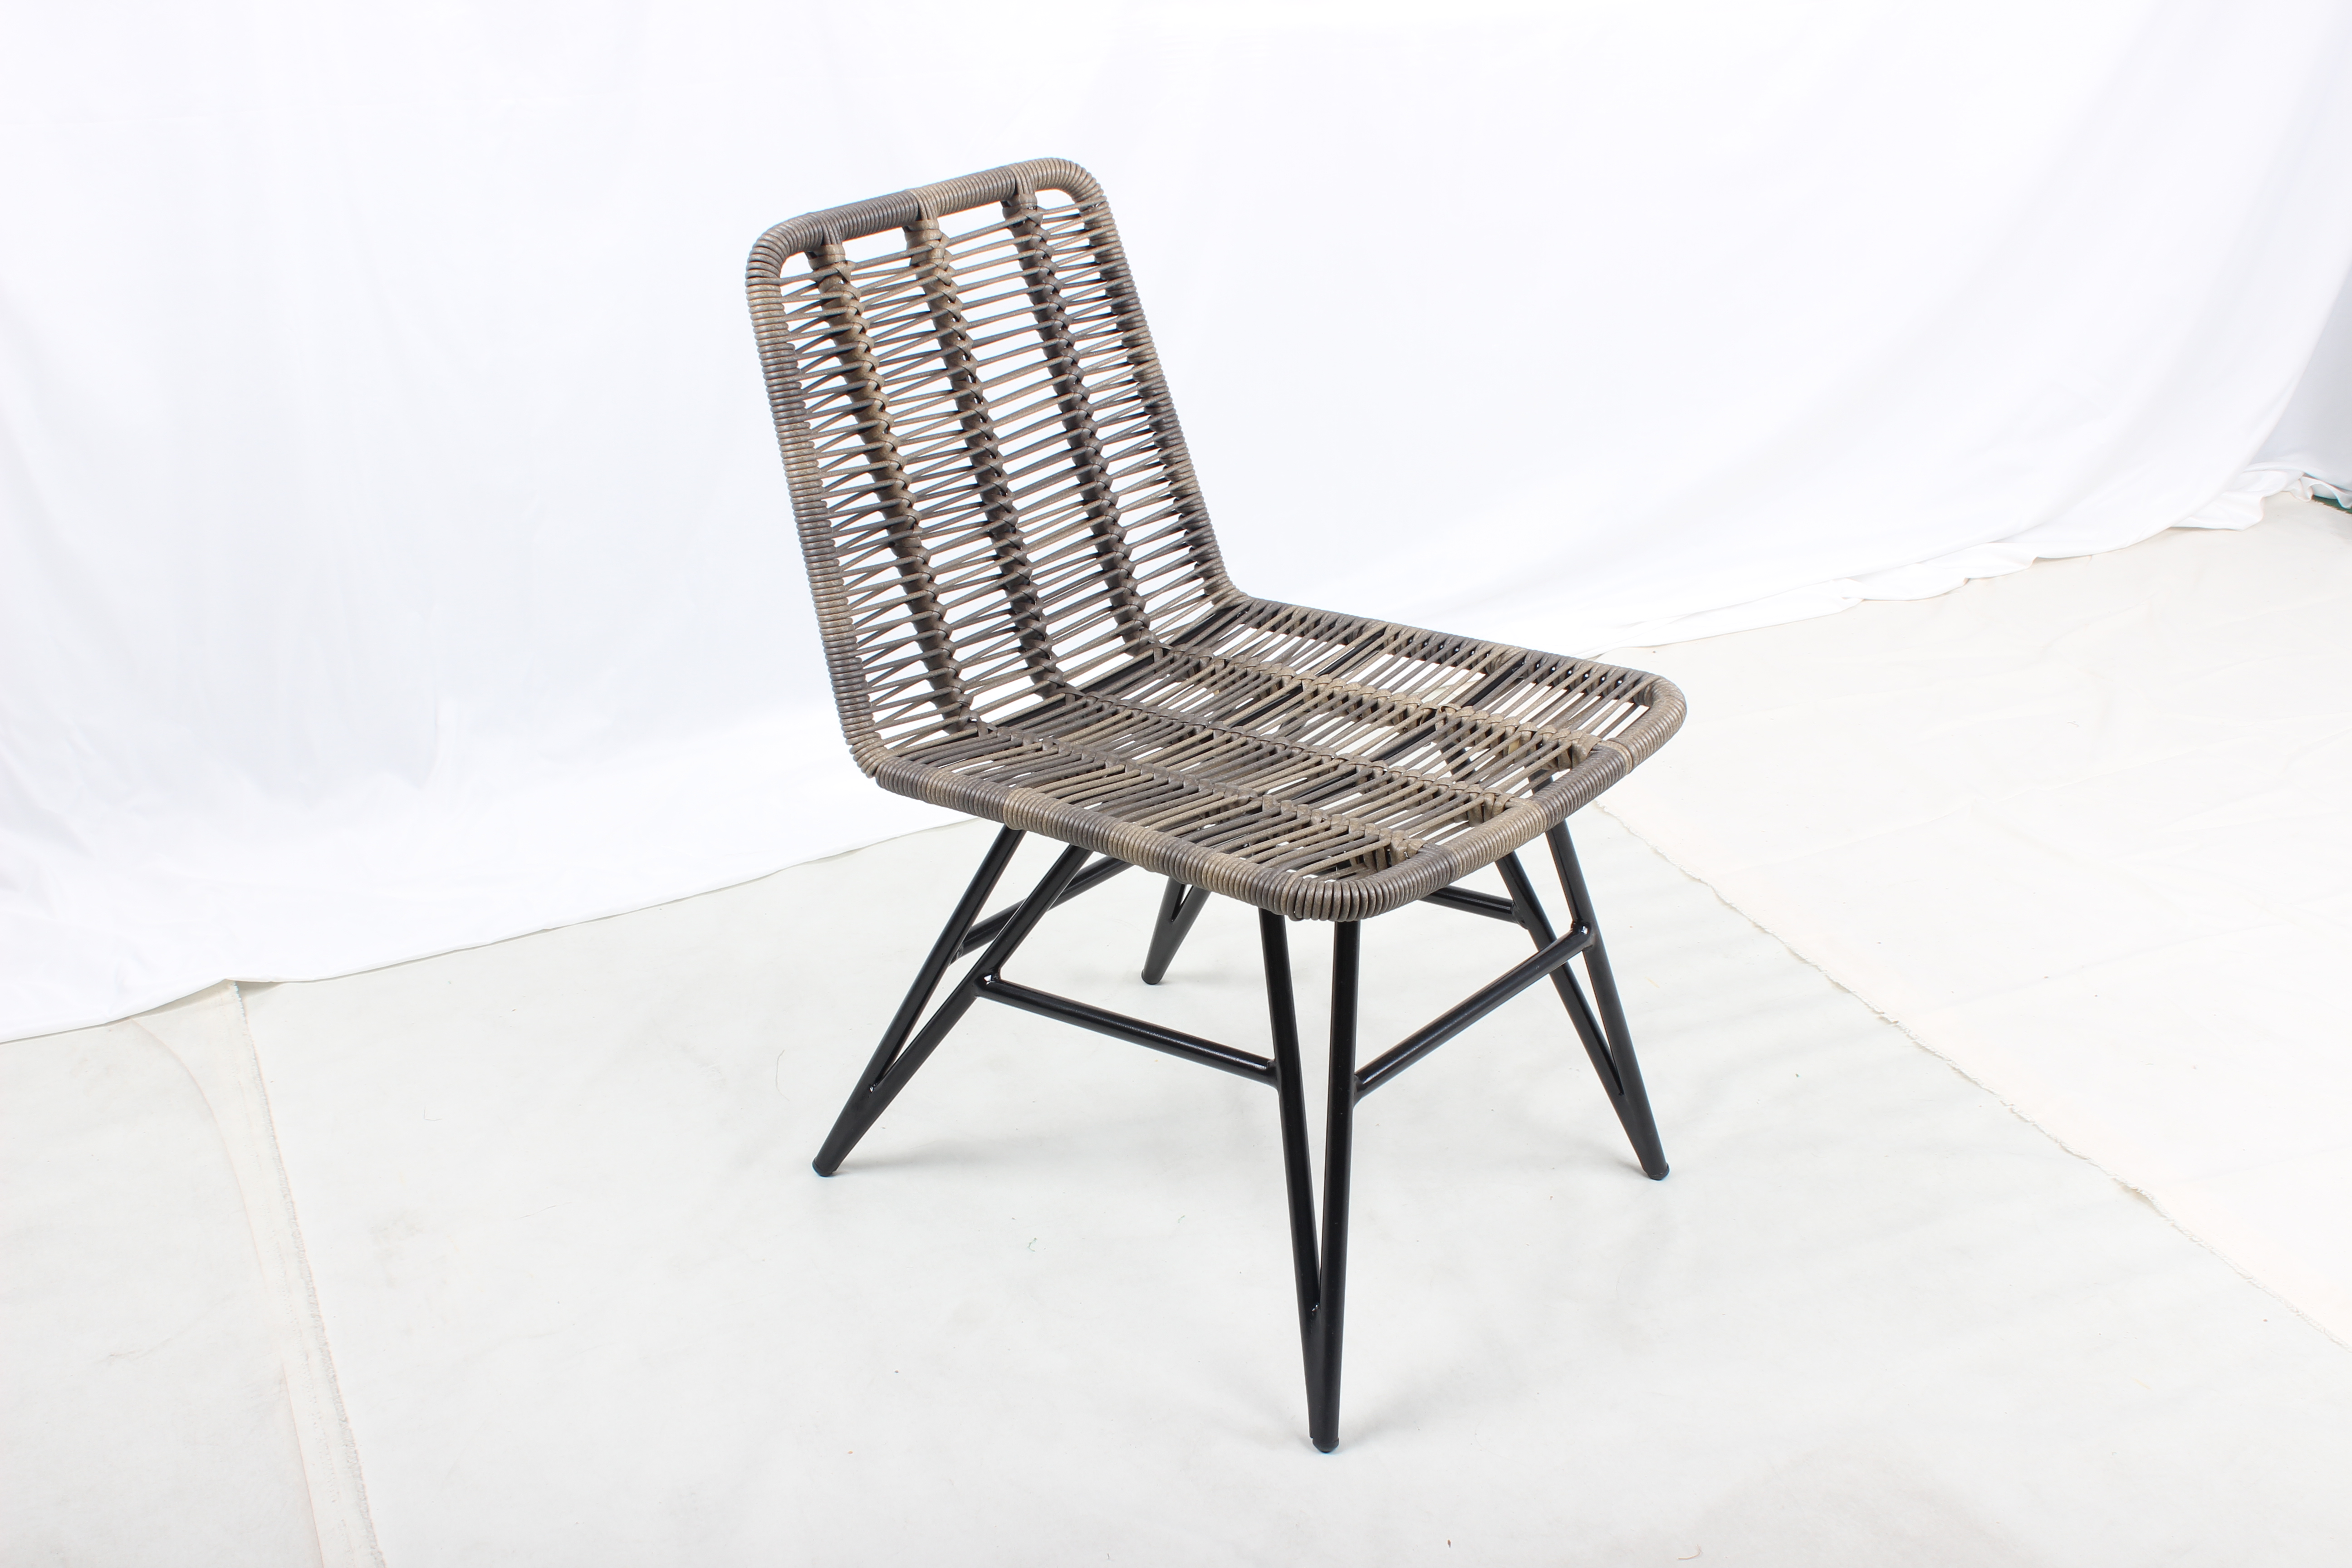 Outdoor round wicker armless dininig chair